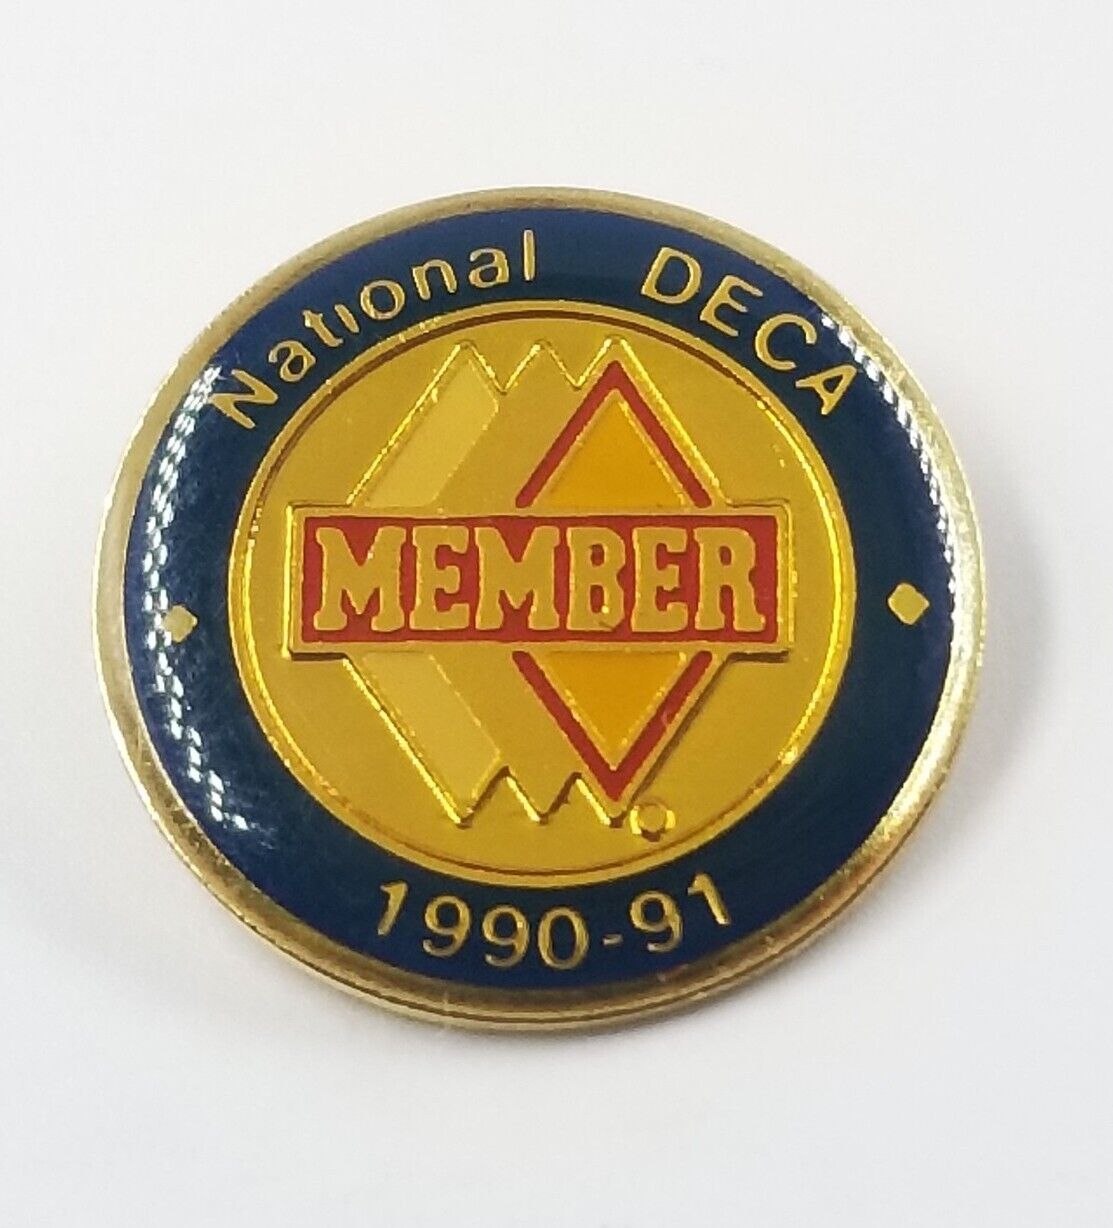 VTG National DECA Member 1990-91 Pin Distributive Education Clubs of America